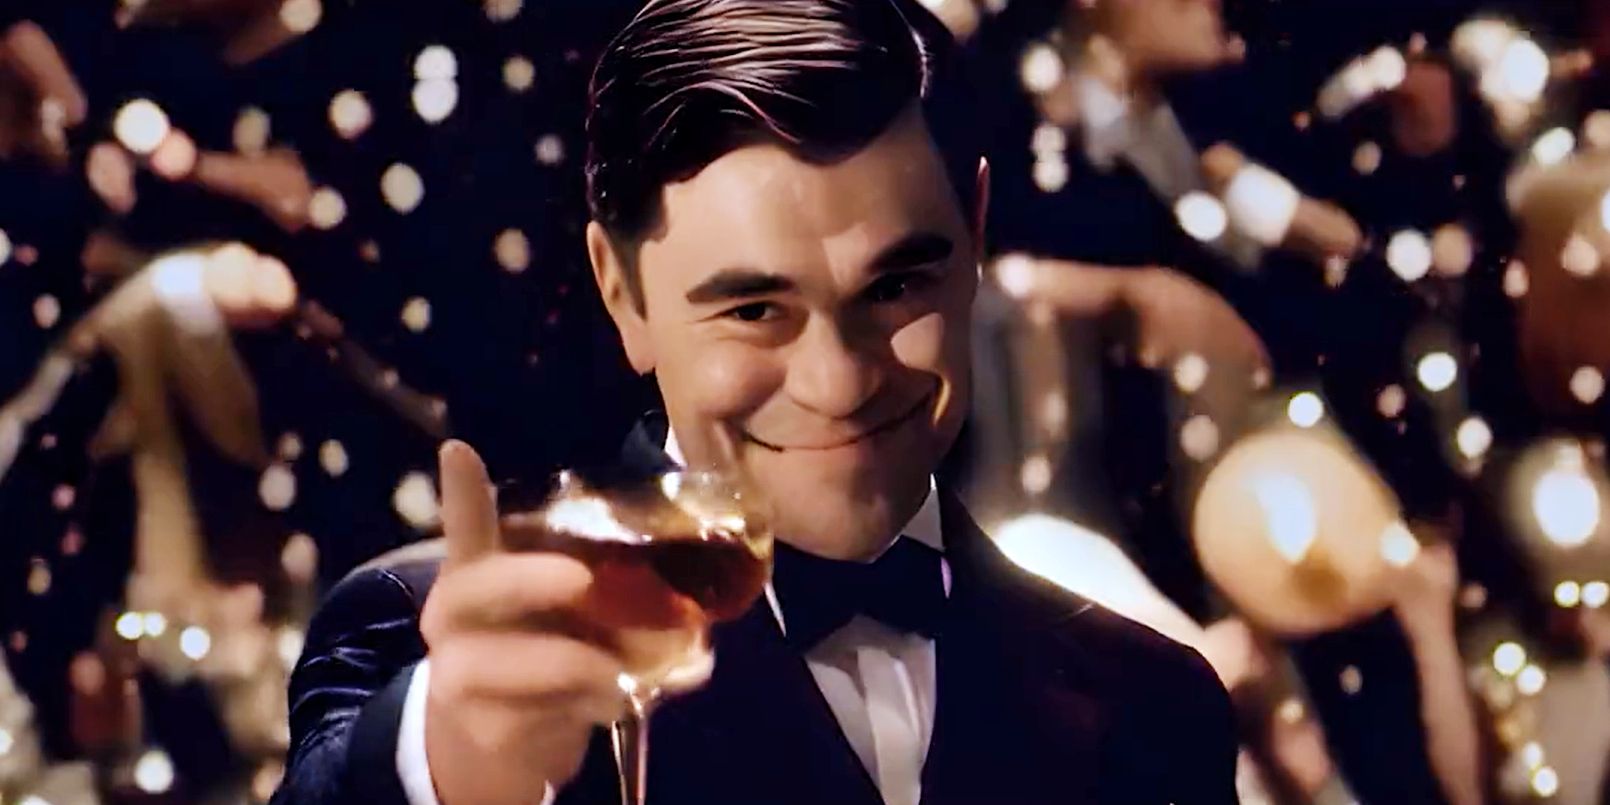 Man in AI generated trailer raising glass like Leonardo DiCaprio in The Great Gatsby